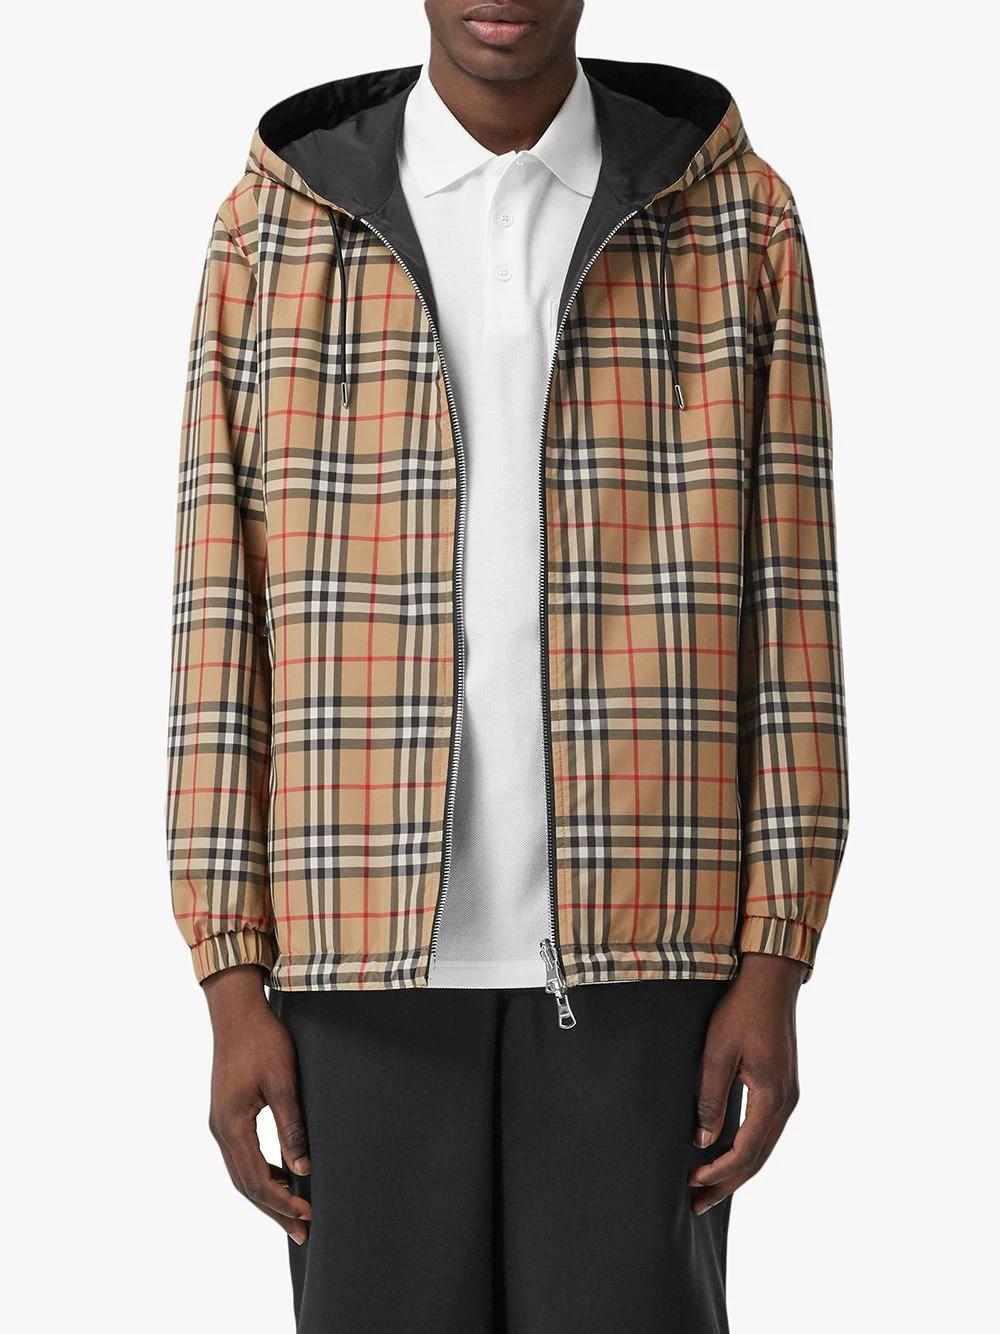 Burberry Reversible Vintage Check Jacket for Men - Save 44% - Lyst